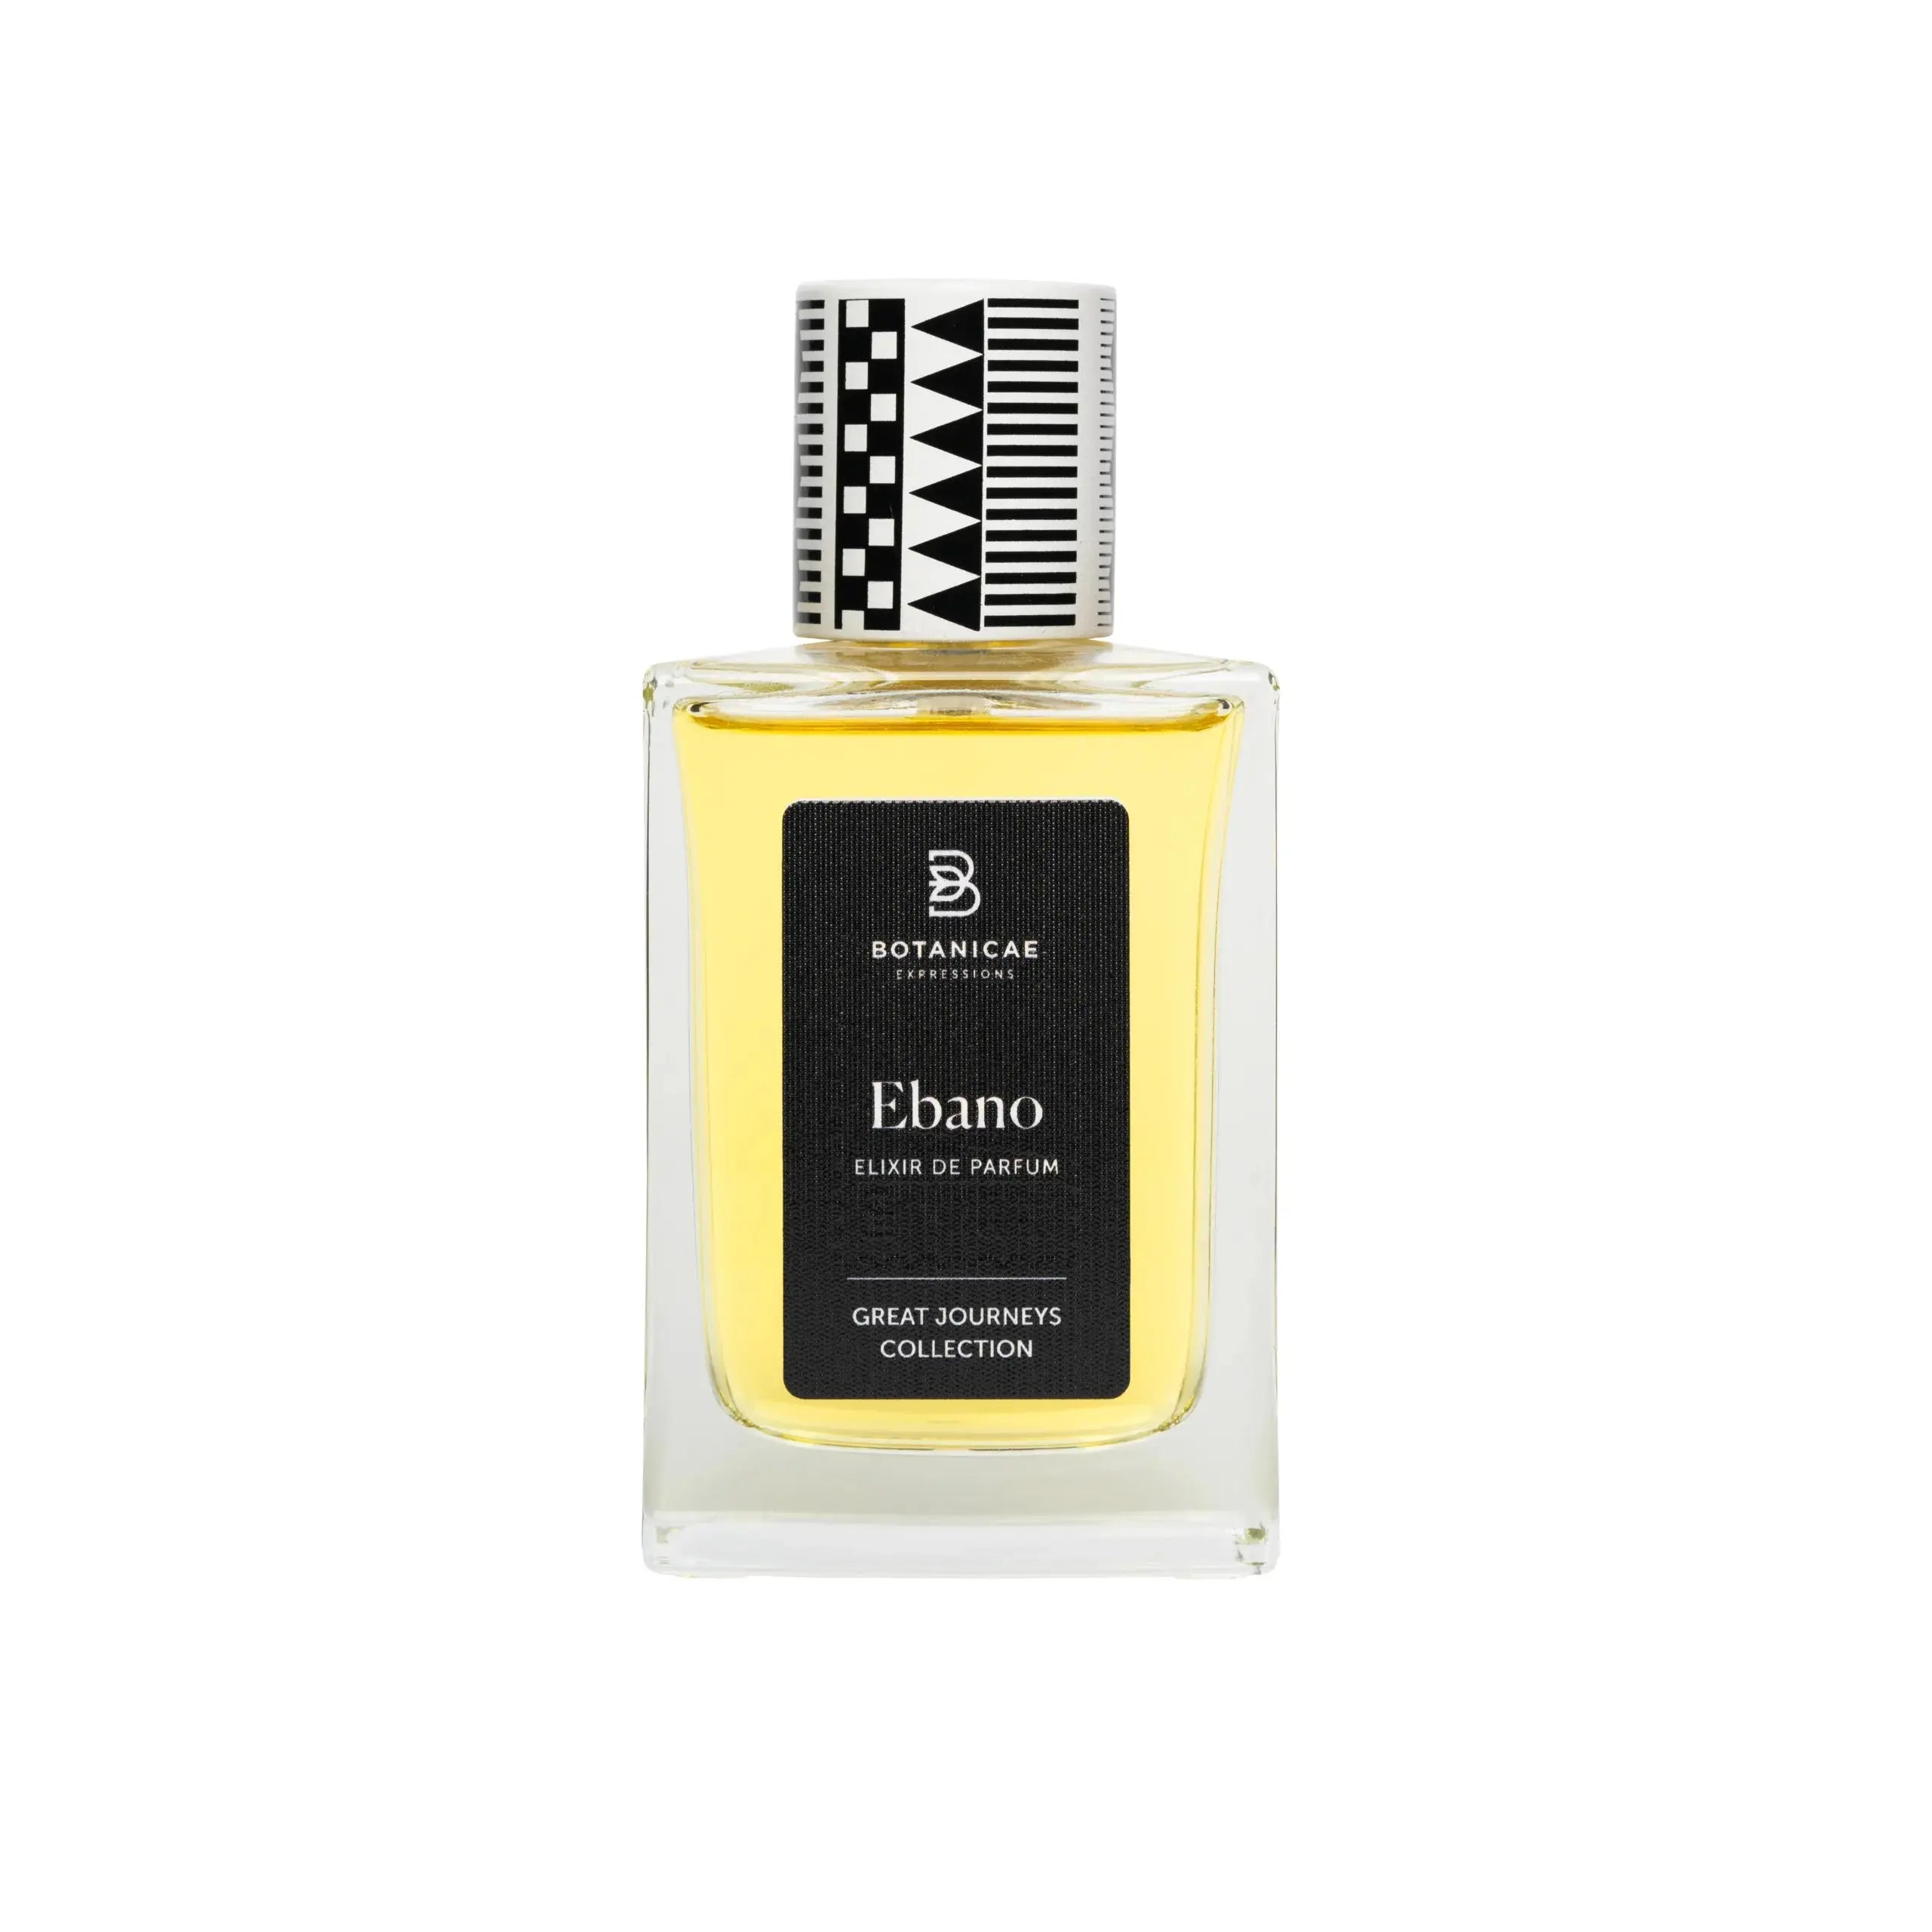 Ebano Elixir de parfum Botanicae - 75 ml